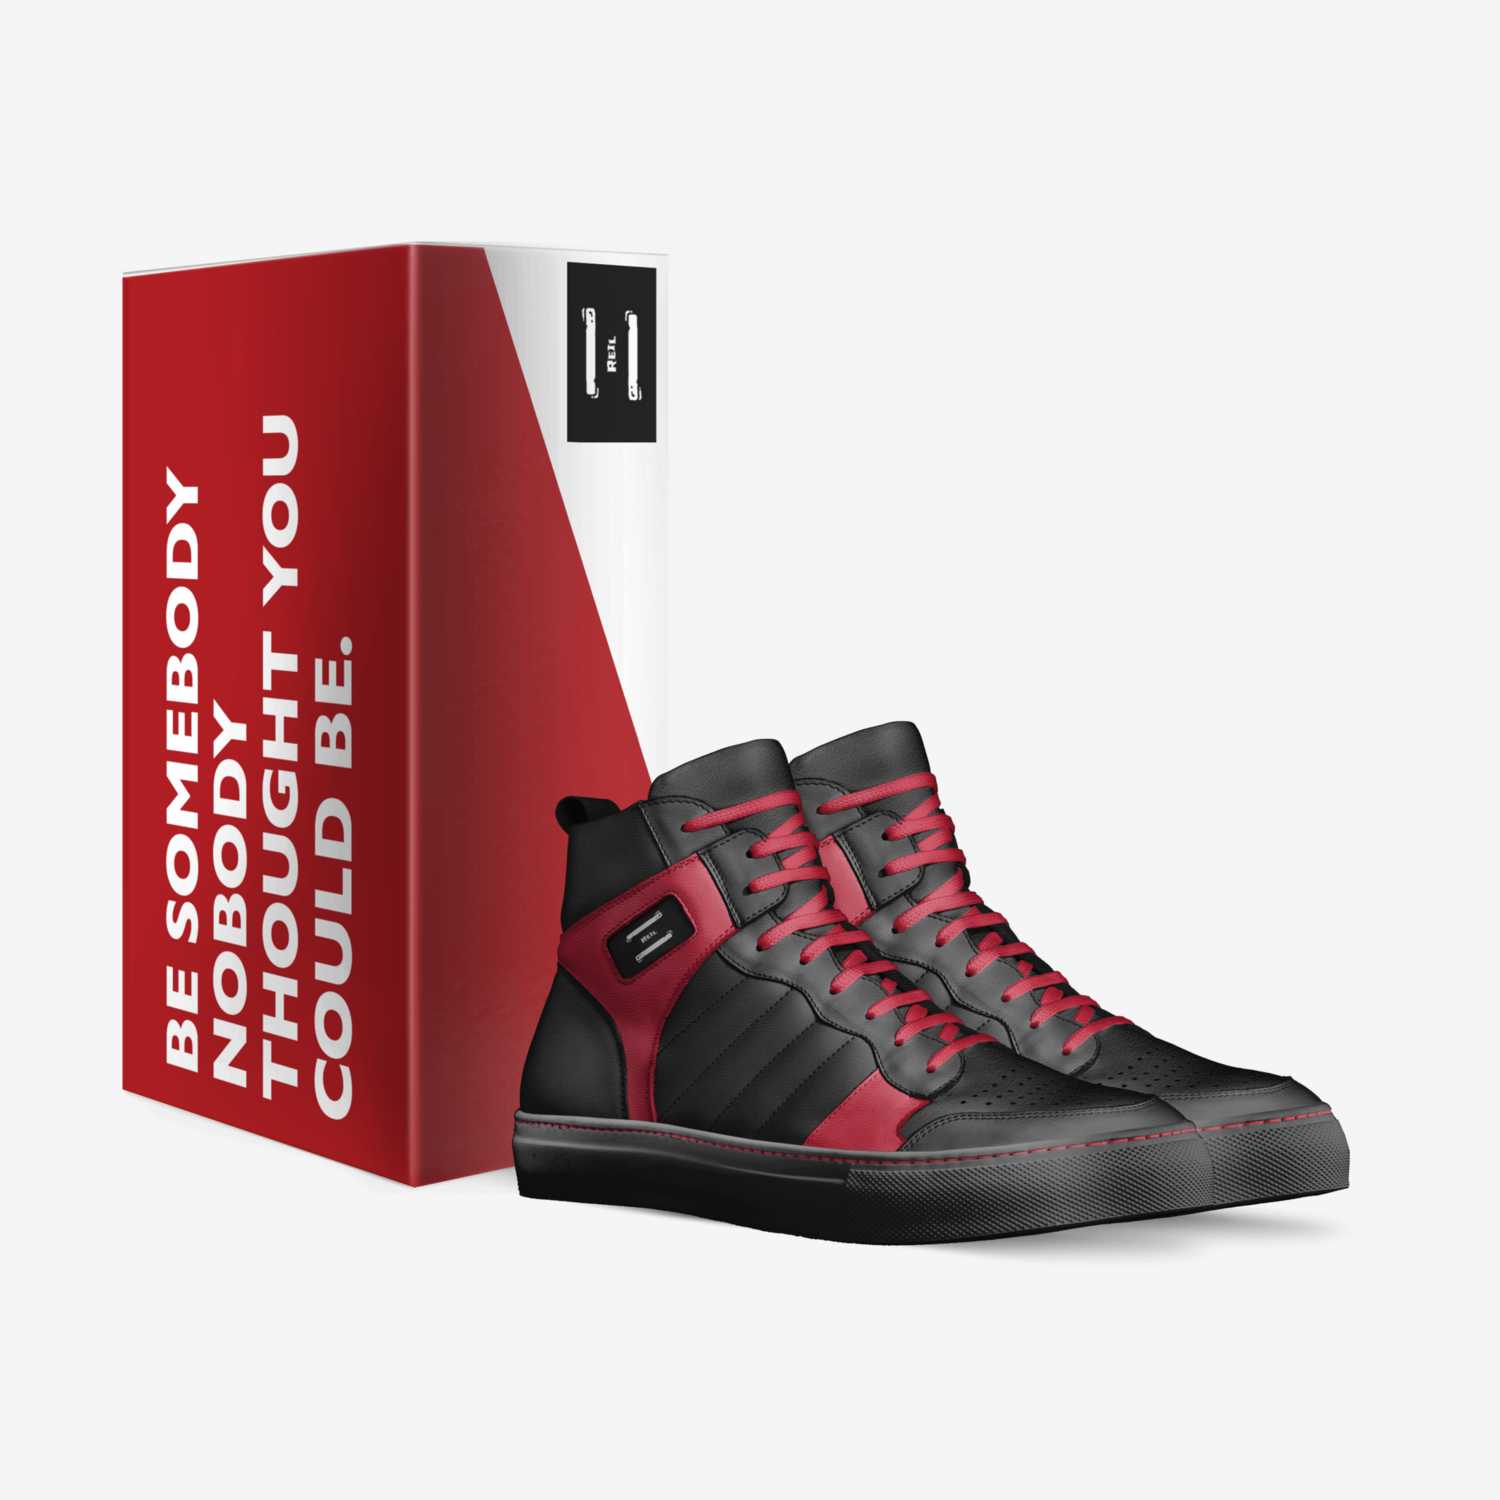 Reil custom made in Italy shoes by Jivason Reil | Box view